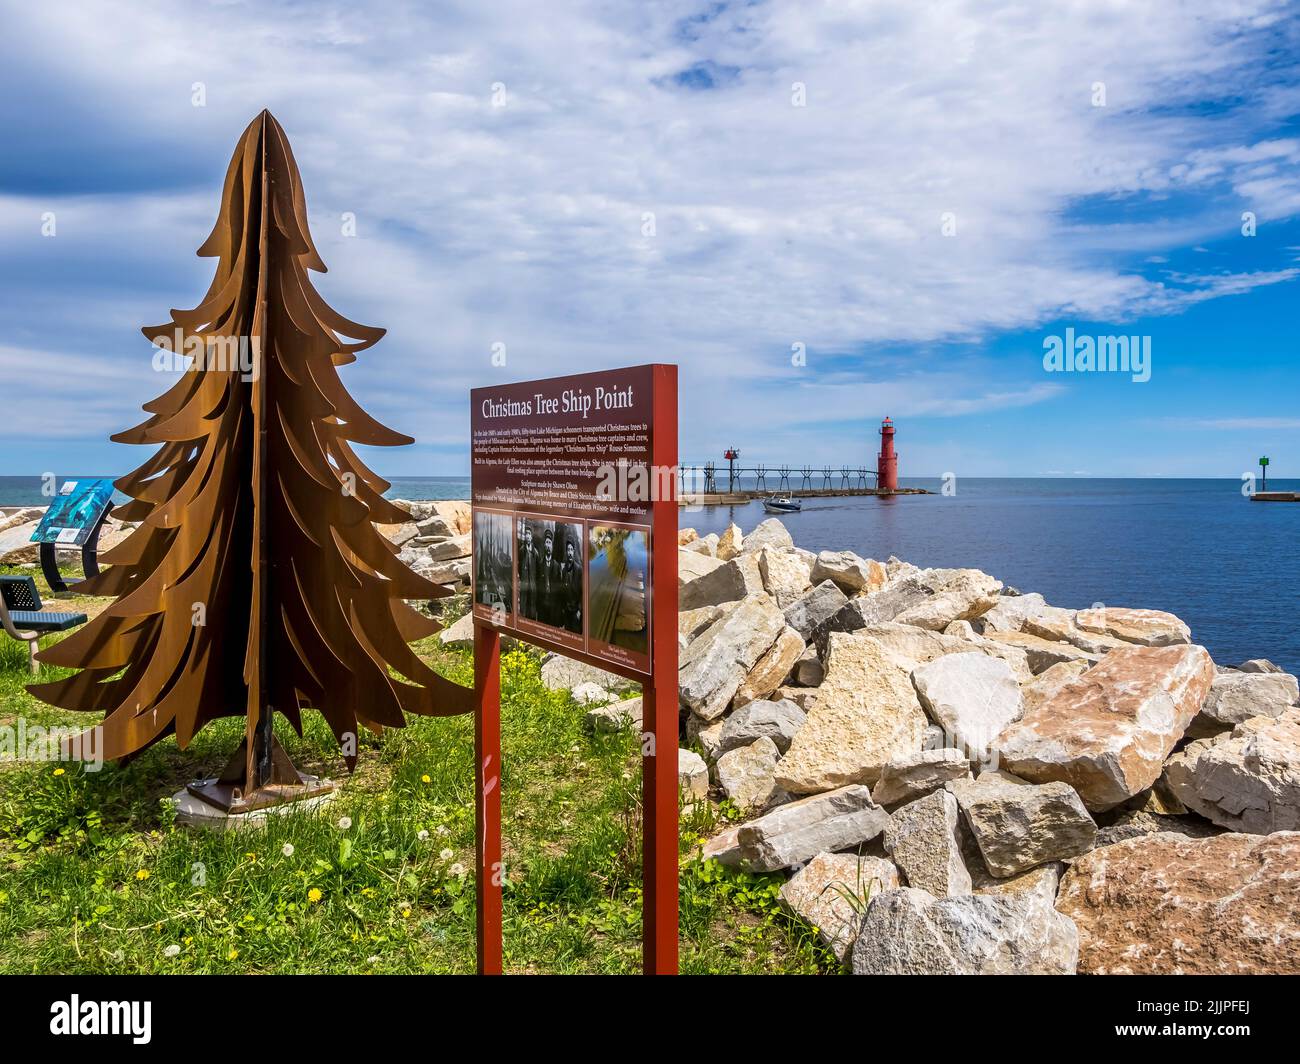 The Algoma Pierhead Lighthouse from Christmas Tree Ship Point on Lake Michigan in Algoma Wisconsin Stock Photo